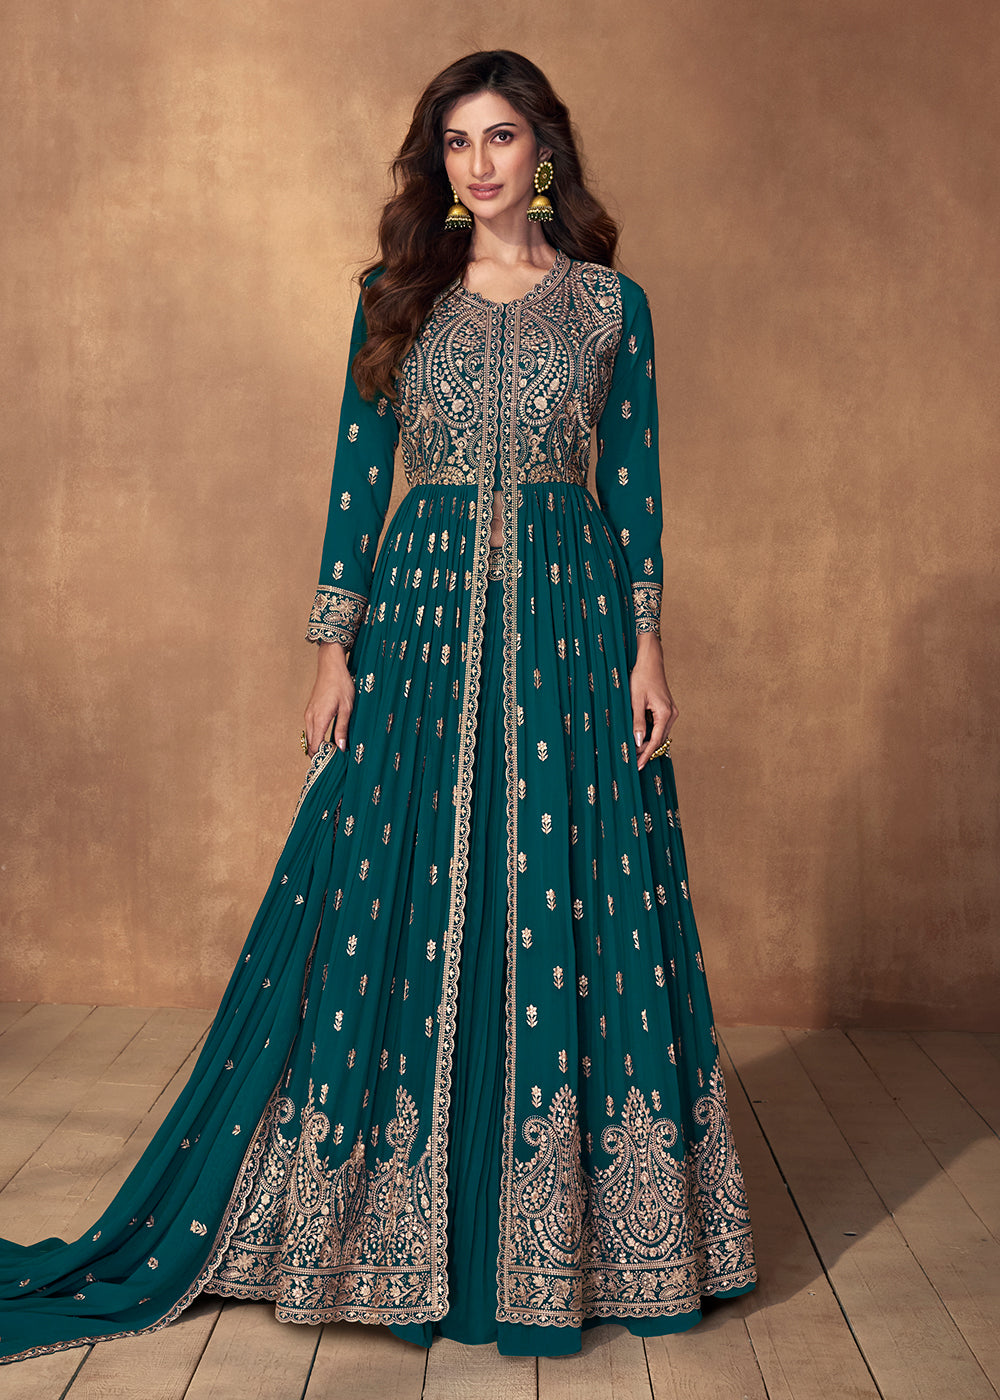 Buy Now Lehenga Style Turquoise Wedding Wear Anarkali Suit Online in USA, UK, Australia, New Zealand, Canada & Worldwide at Empress Clothing.